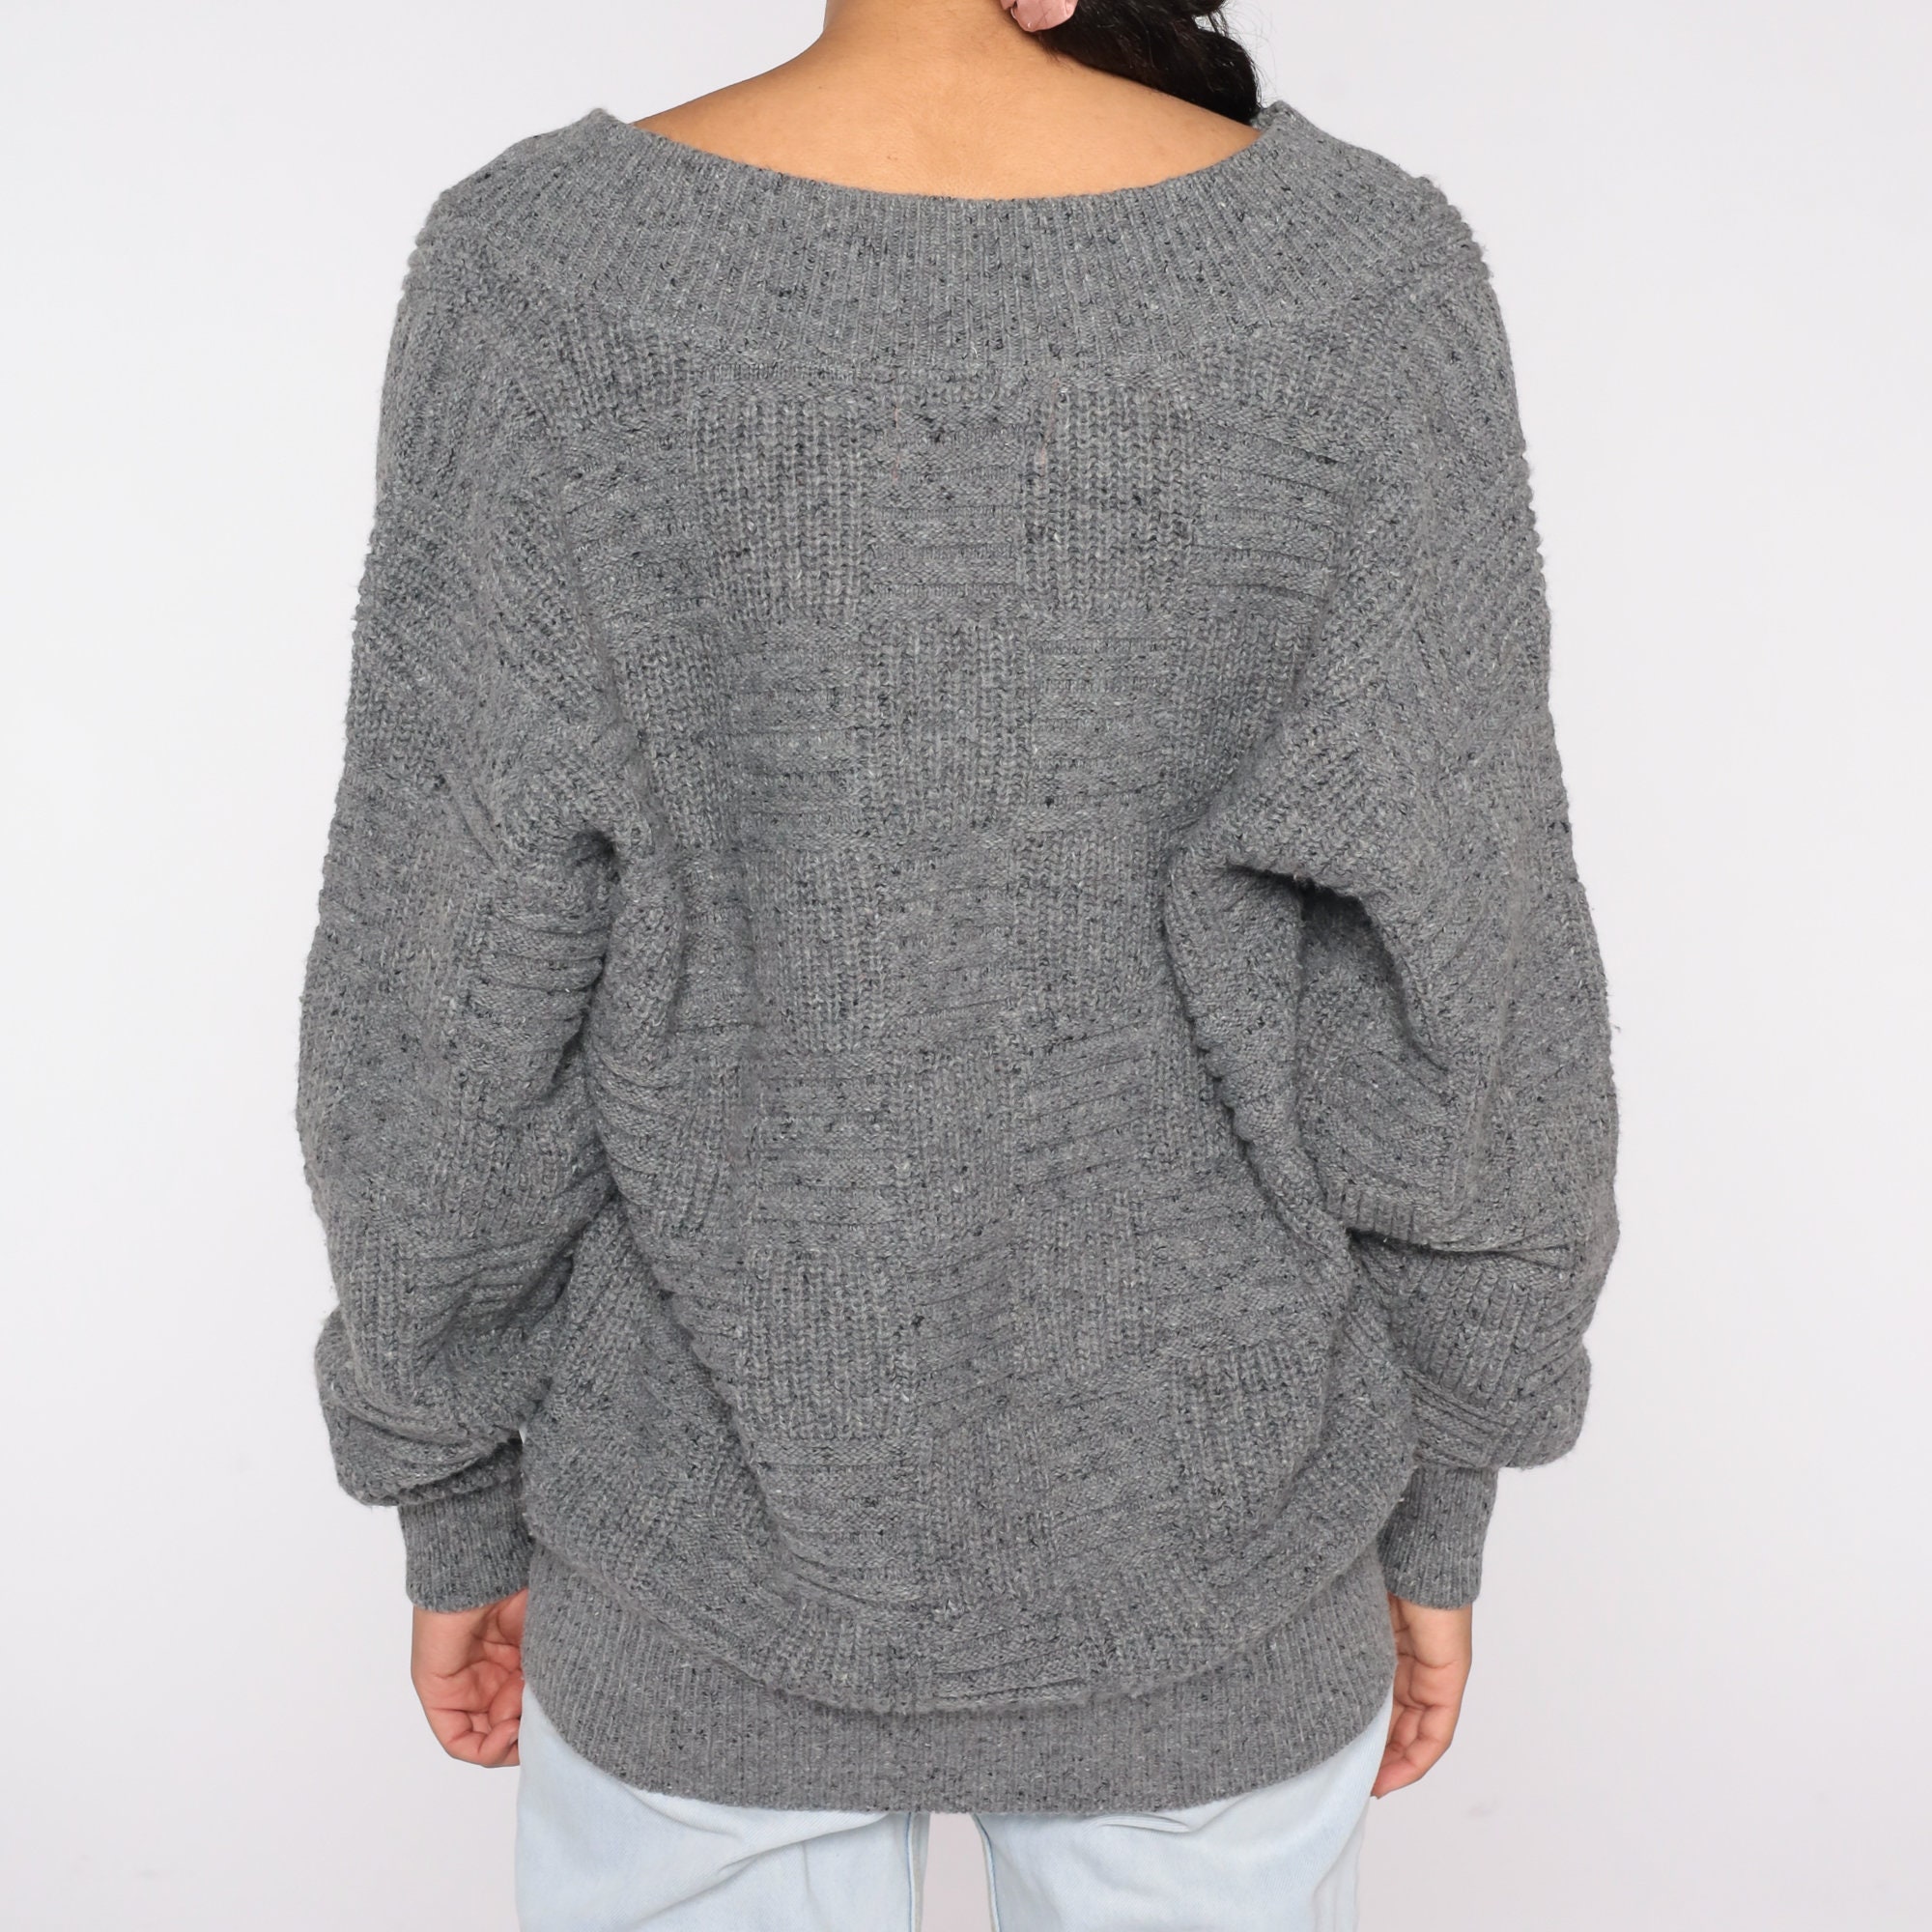 Pierre Cardin Sweater 90s Grey Textured Knit Sweater Grunge Slouchy ...